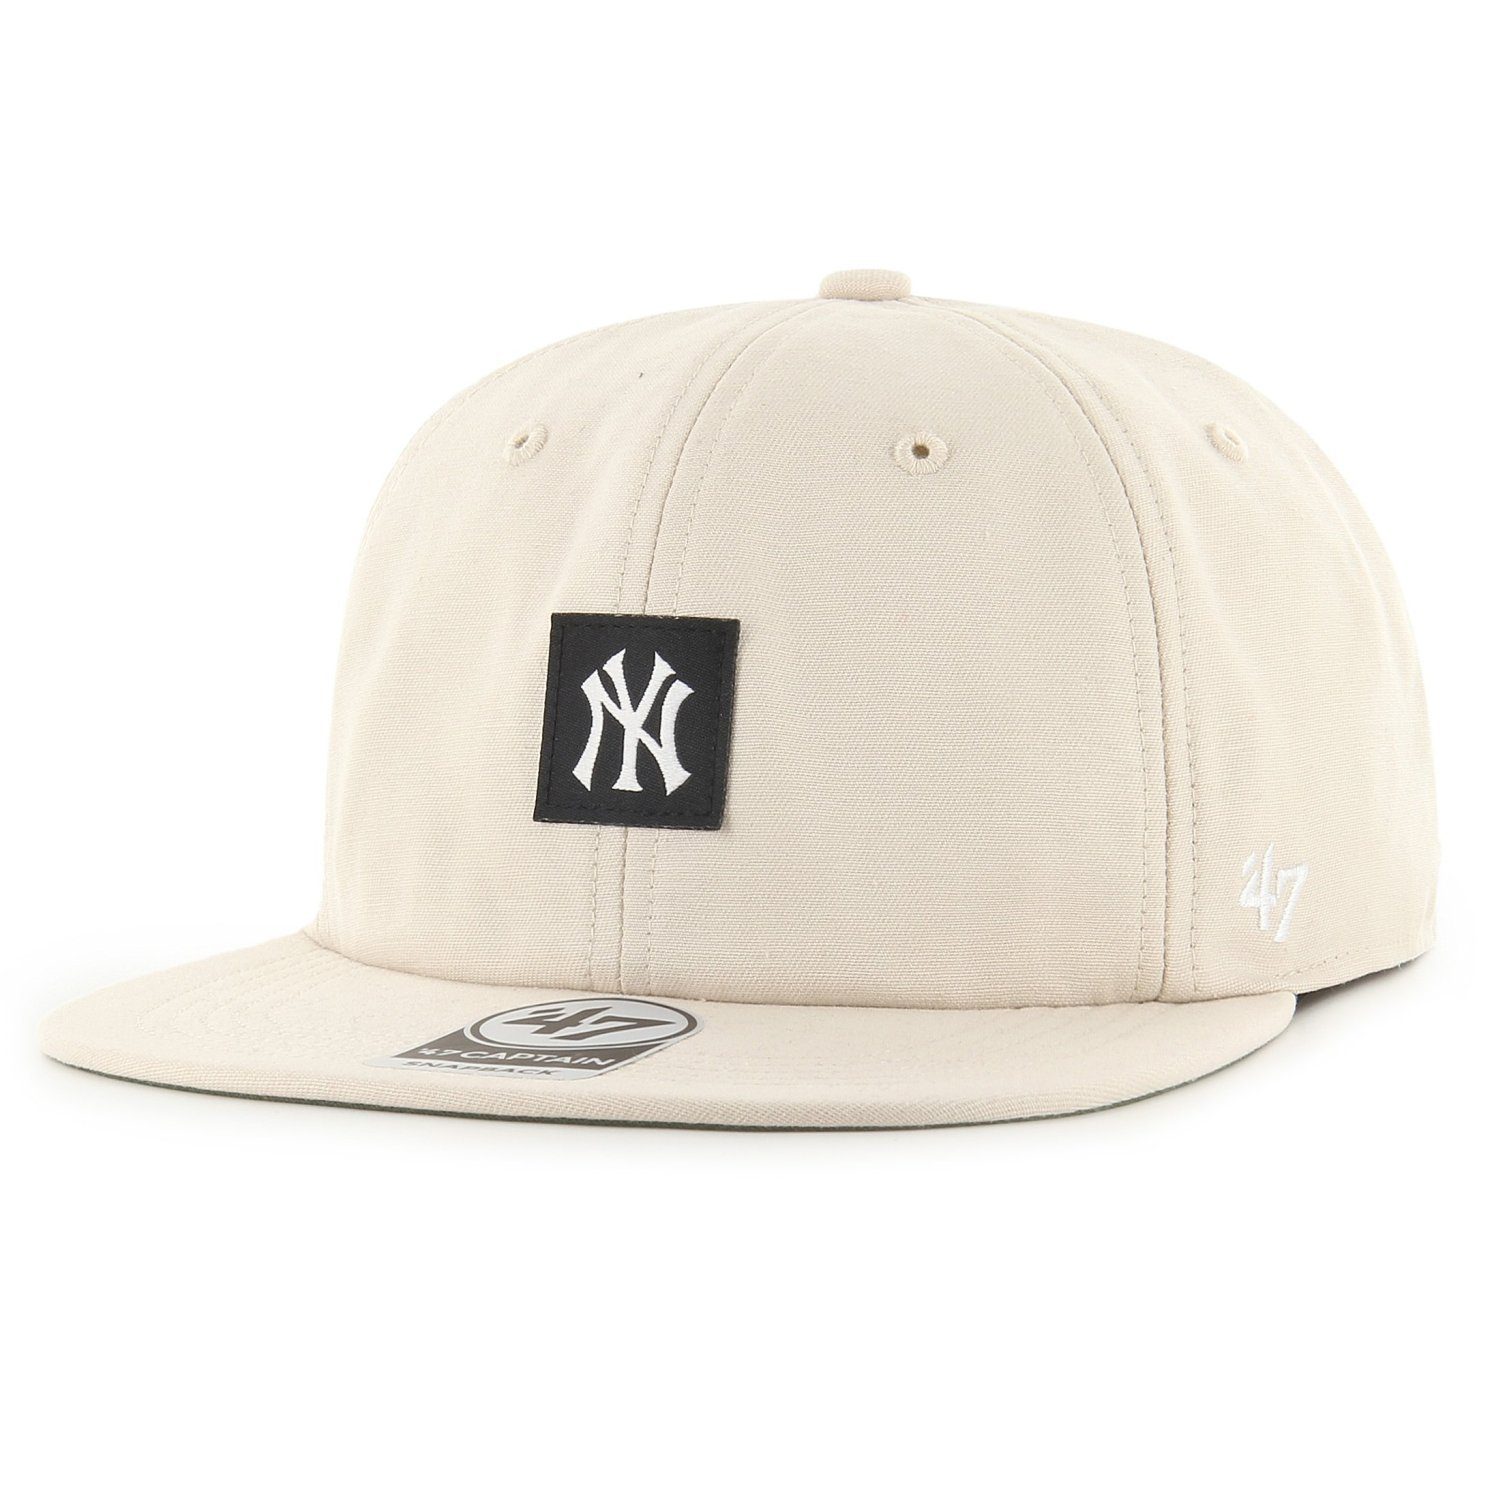 '47 Brand Snapback Cap Captain COMPACT New York Yankees